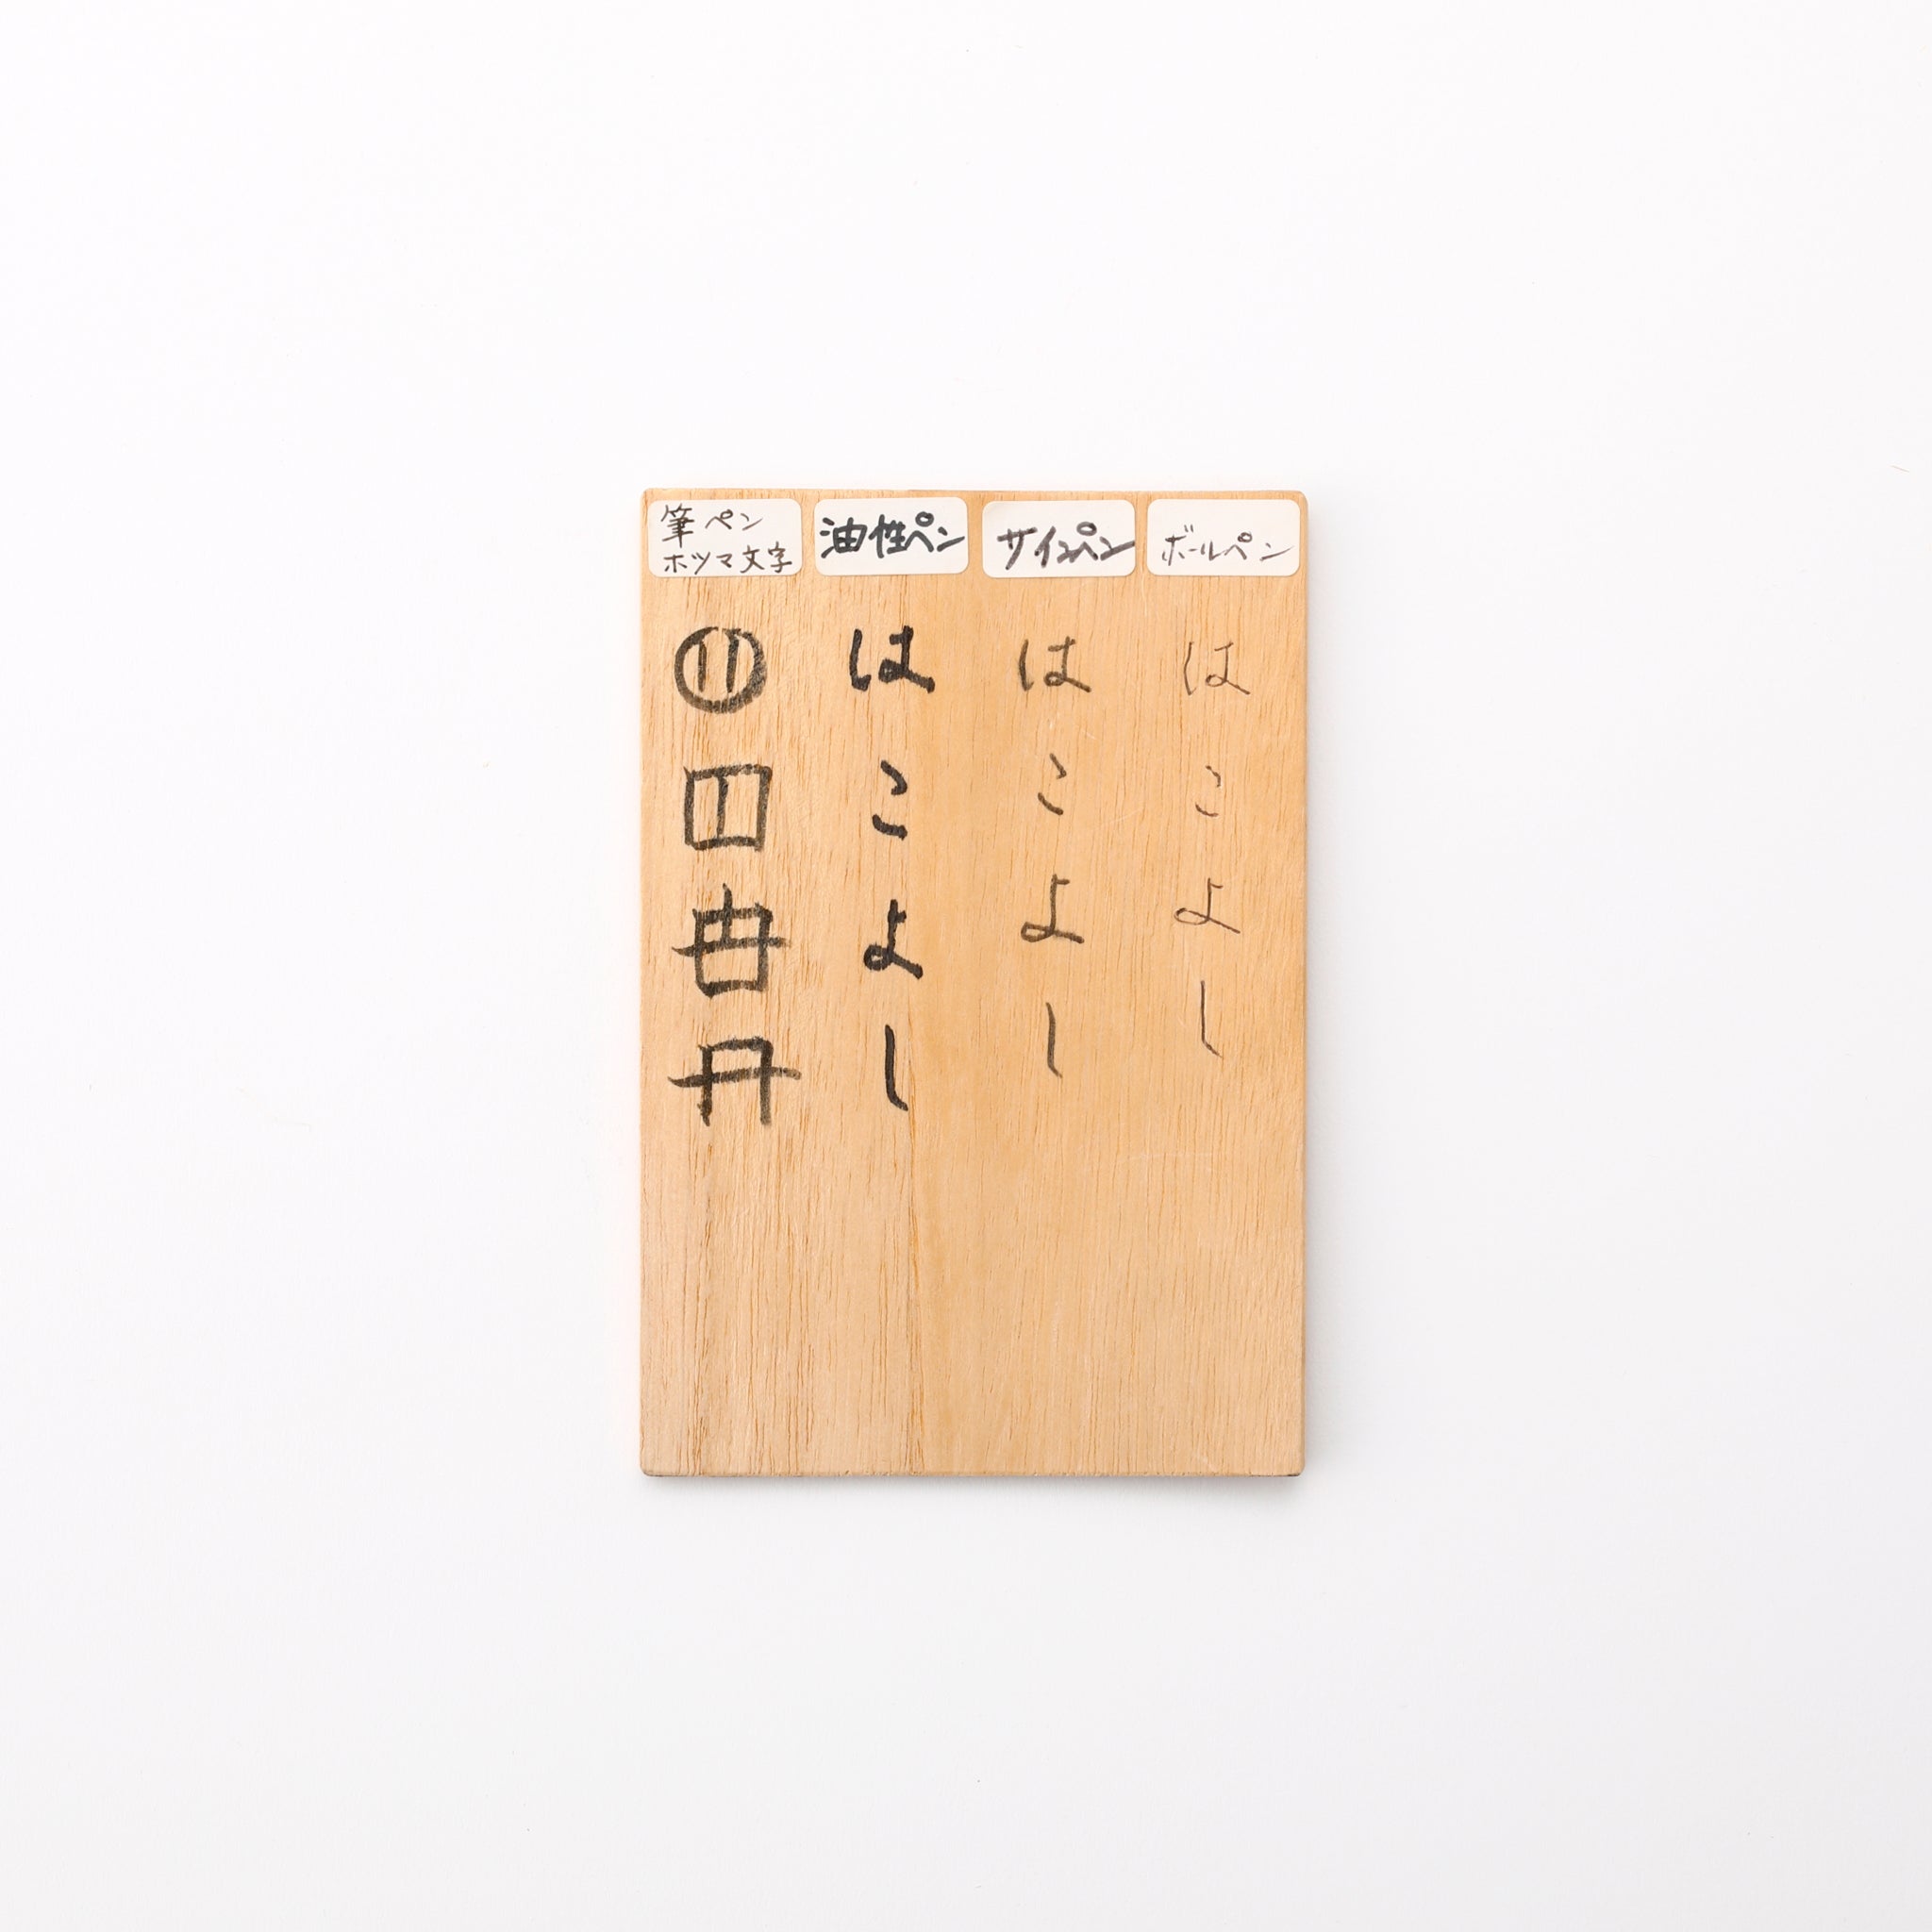 Ukiyoe Wooden Postcards (5 Piece Set)